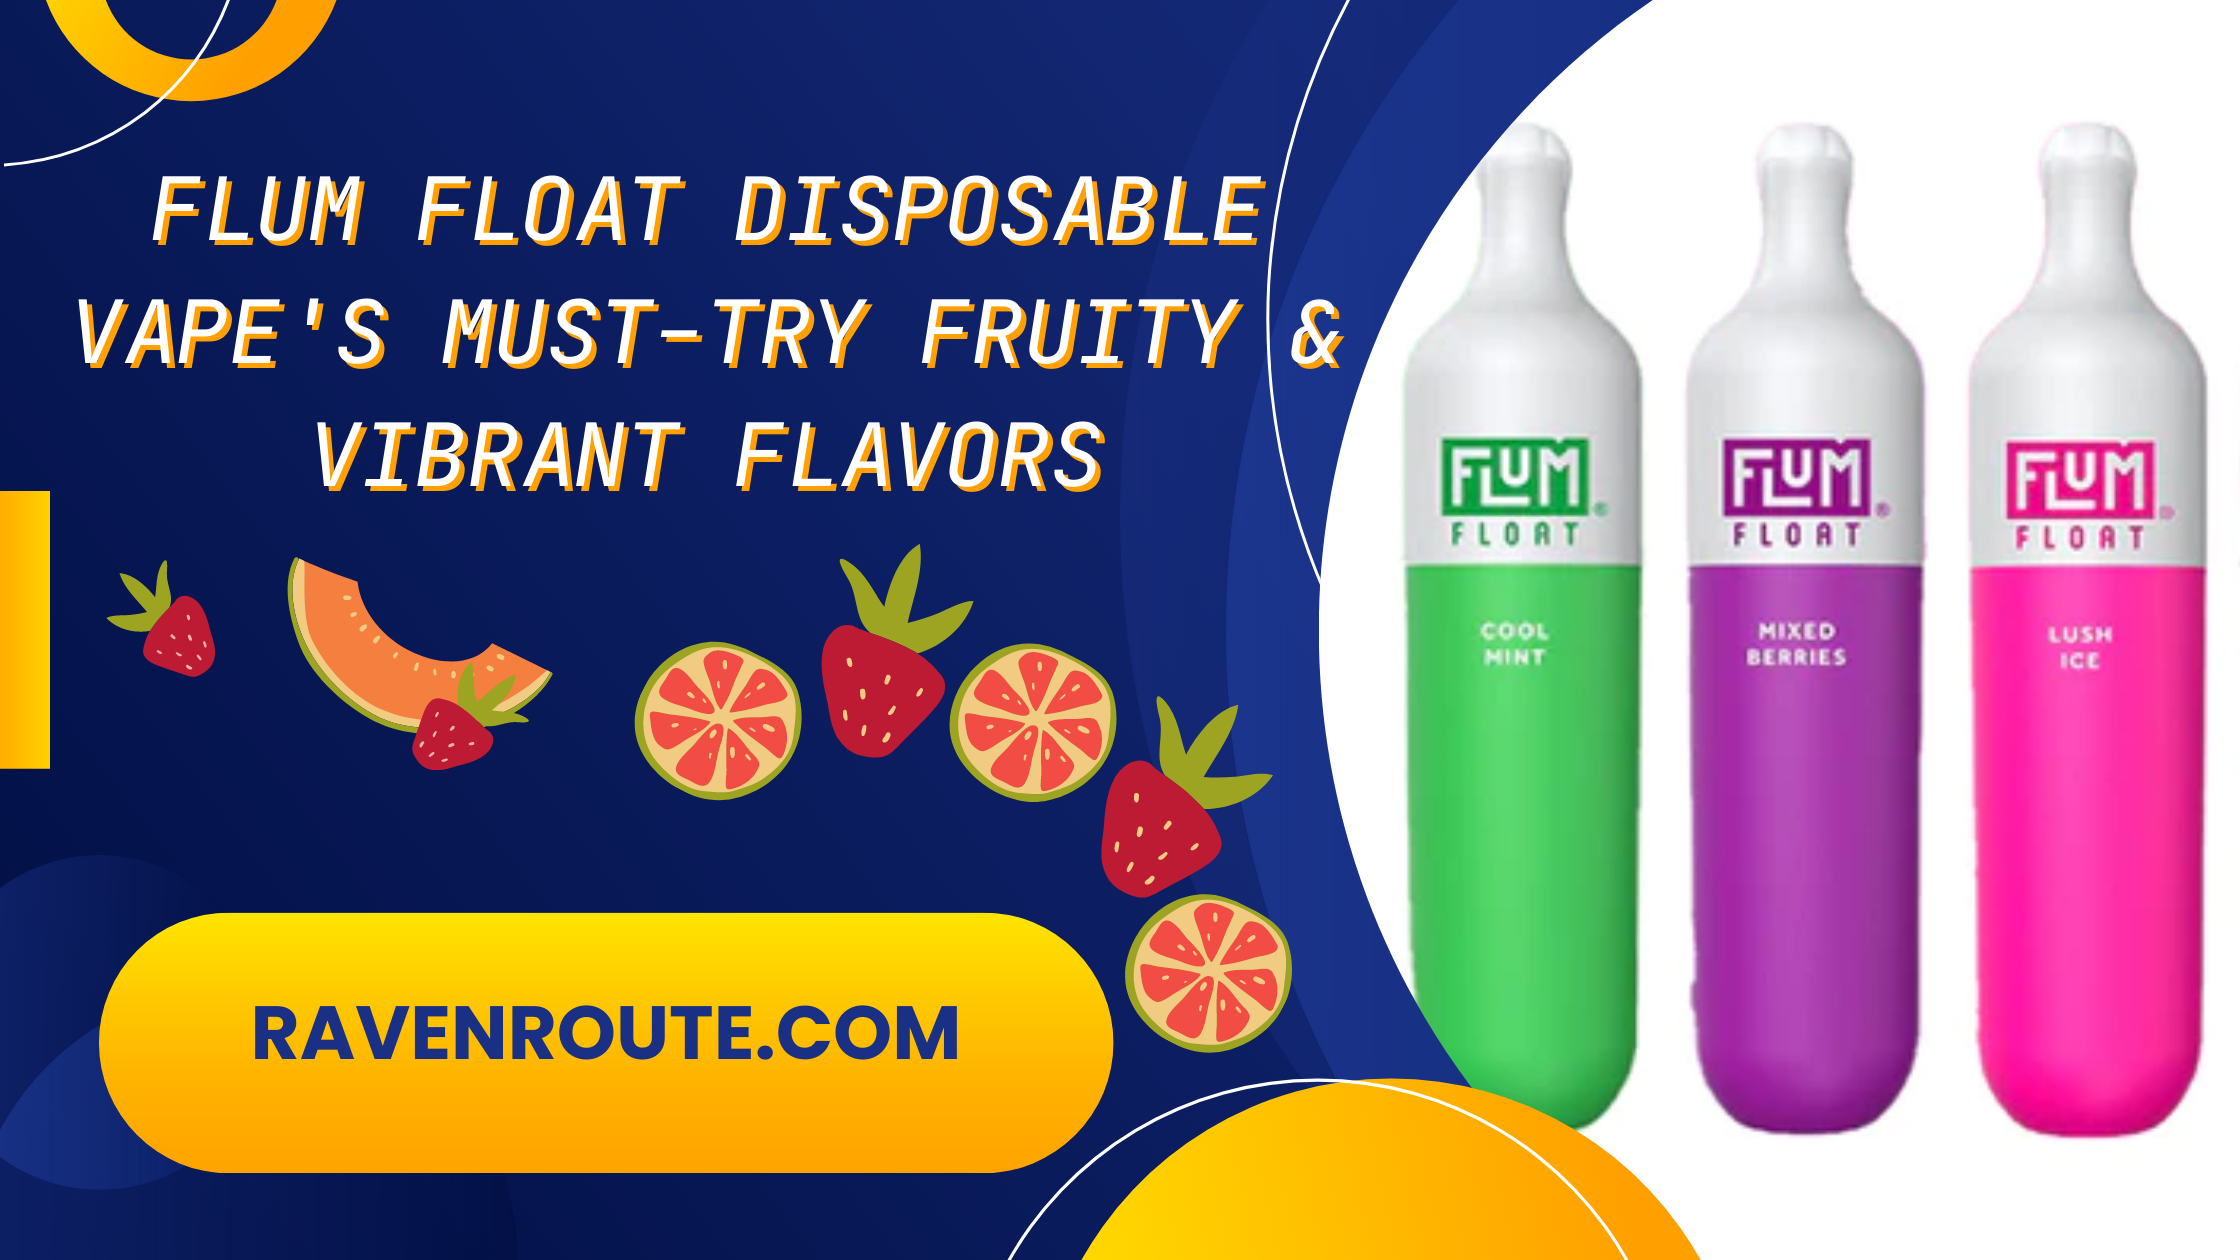 Flum Float Disposable Vape's Must-Try Fruity & Vibrant Flavors